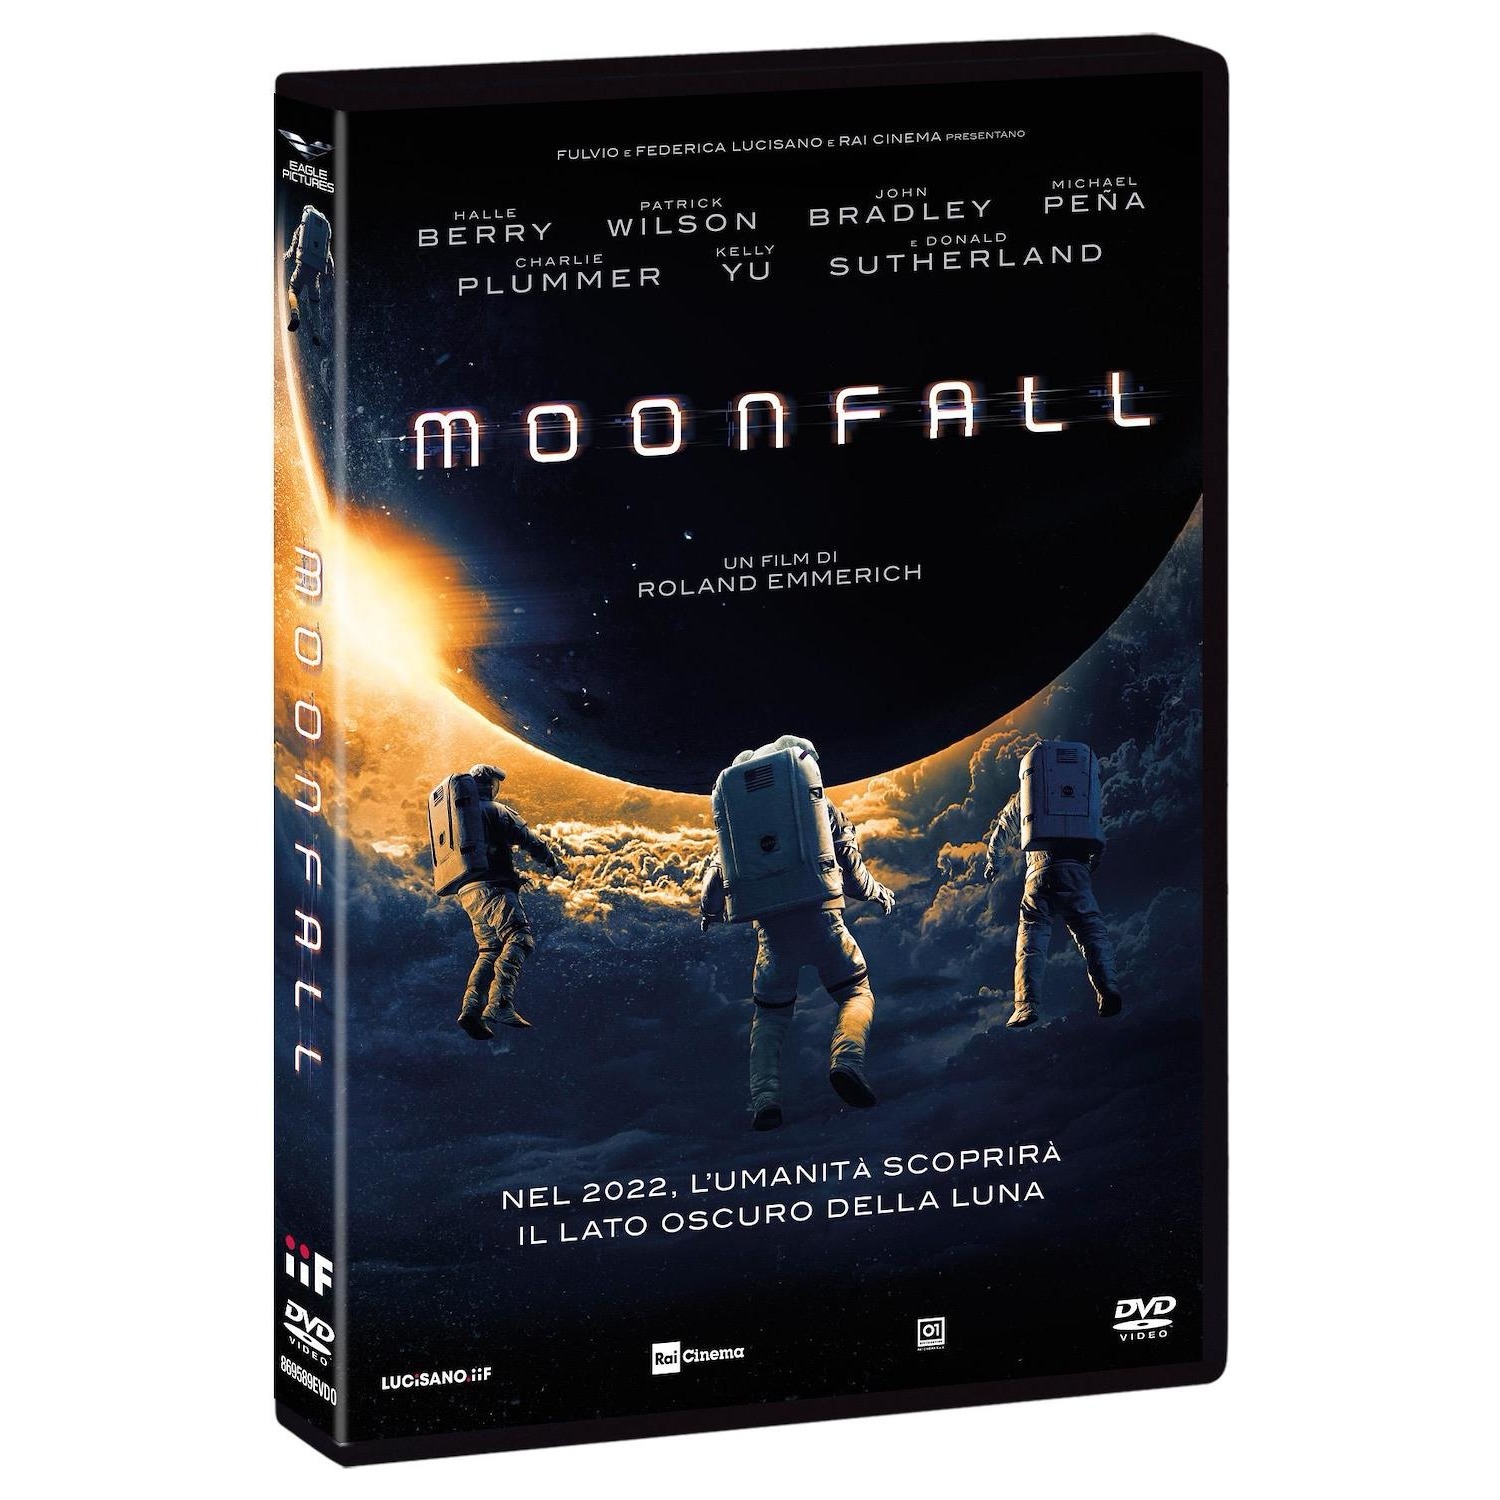 Immagine per DVD Moofall da DIMOStore